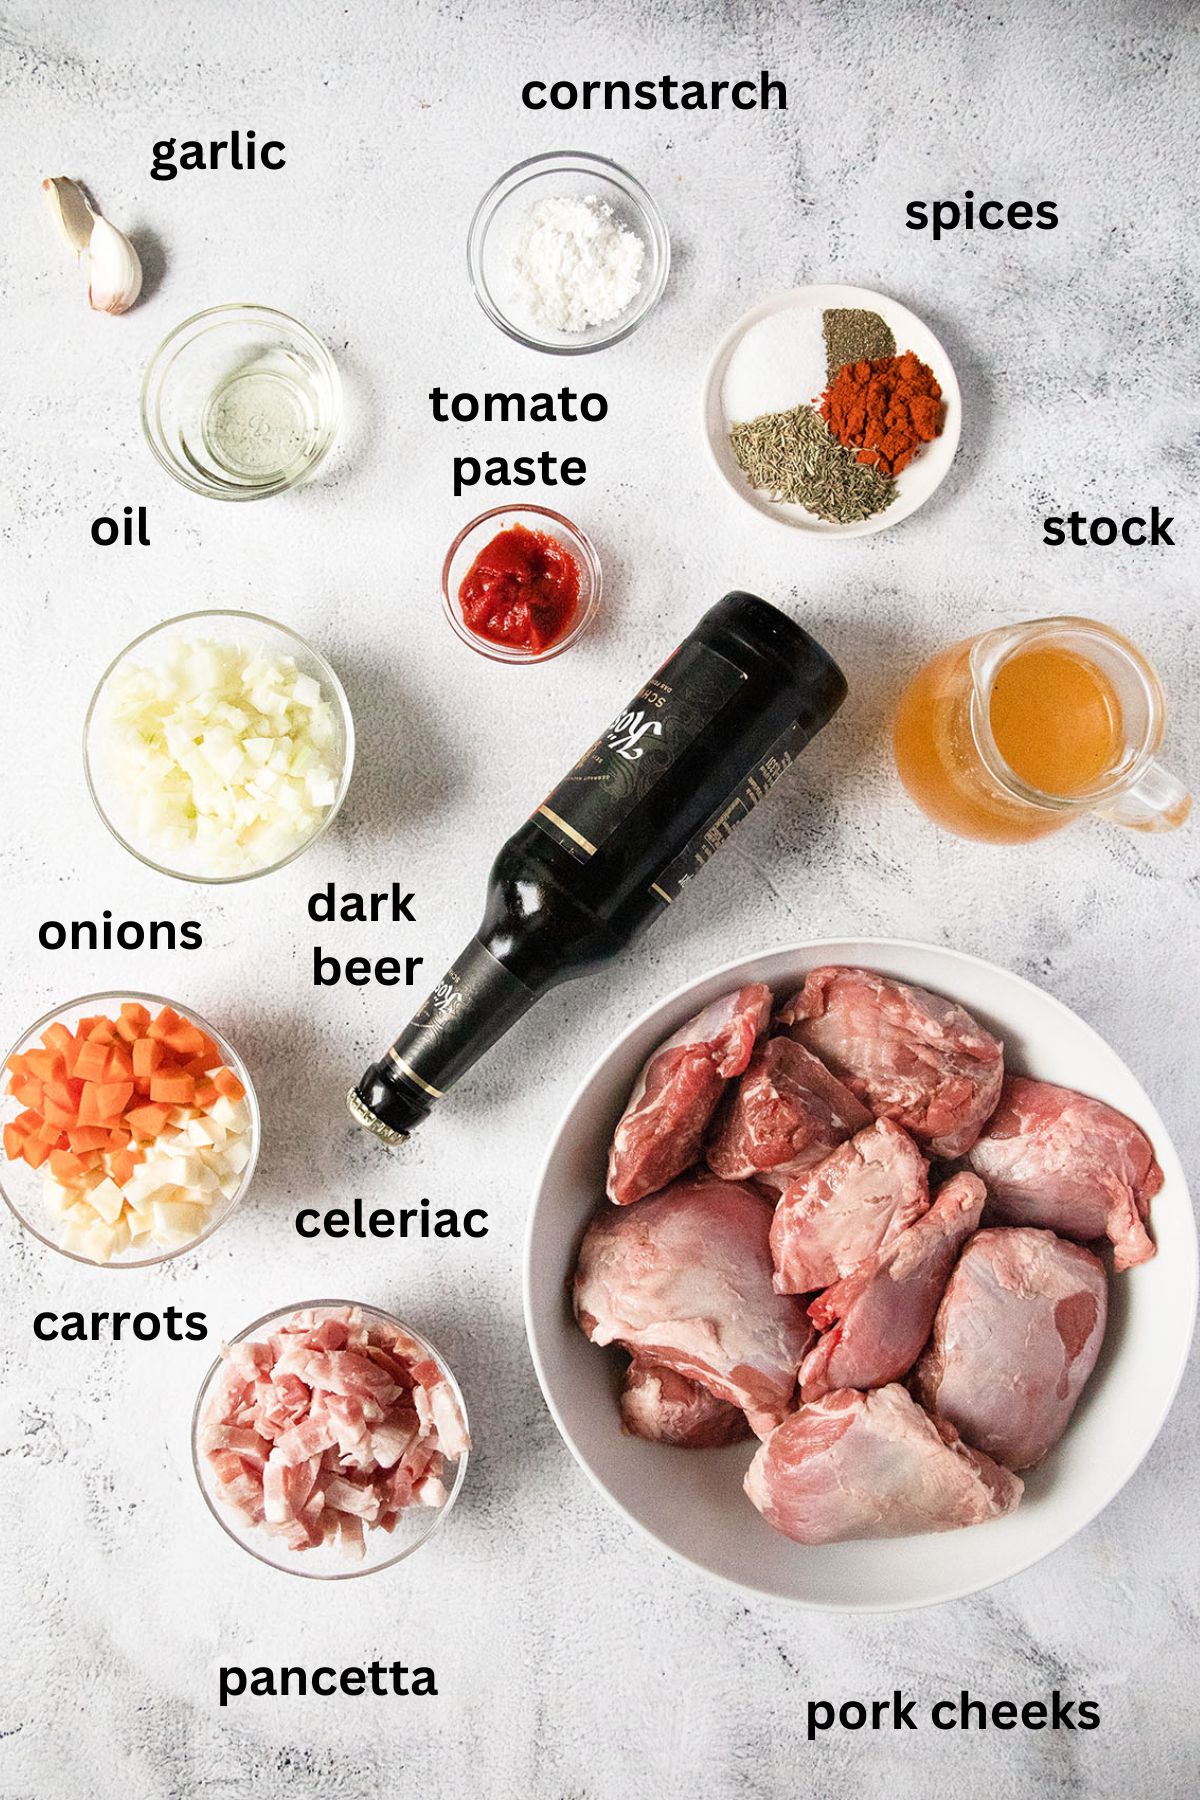 listed ingredients for cooking pork cheeks wiht dark beer, vegetables and pancetta.